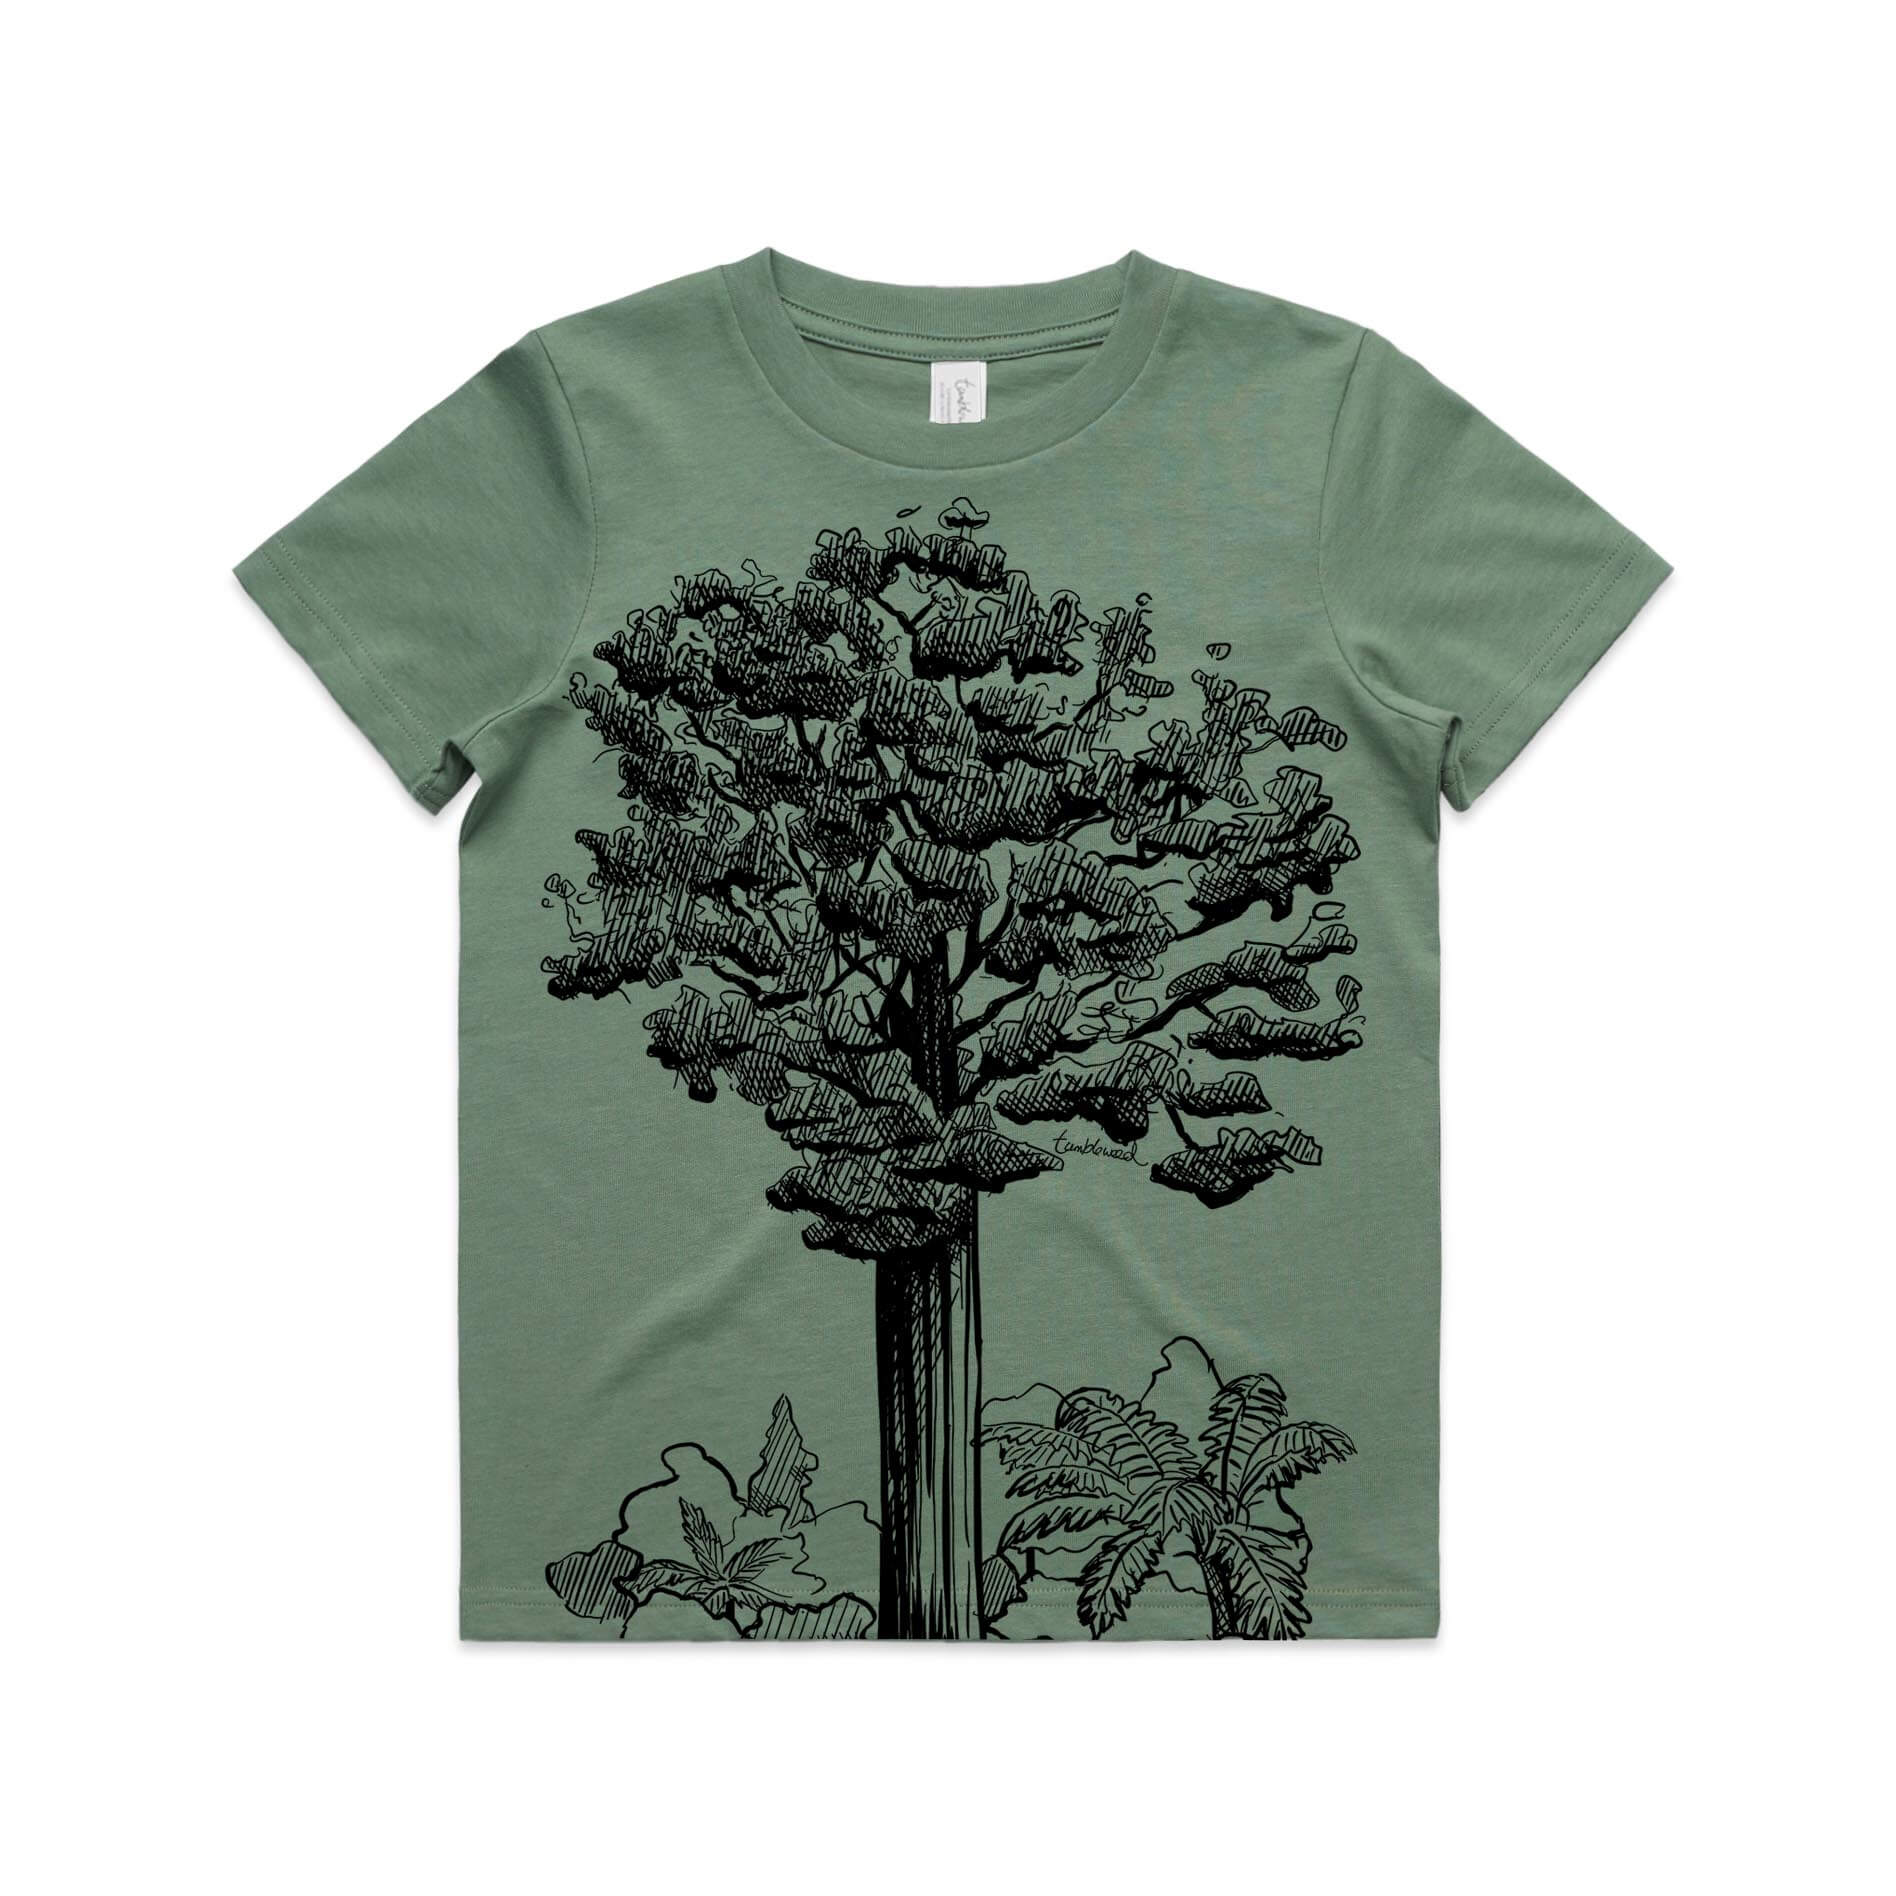 Sage, cotton kids' t-shirt with screen printed tuatara design.